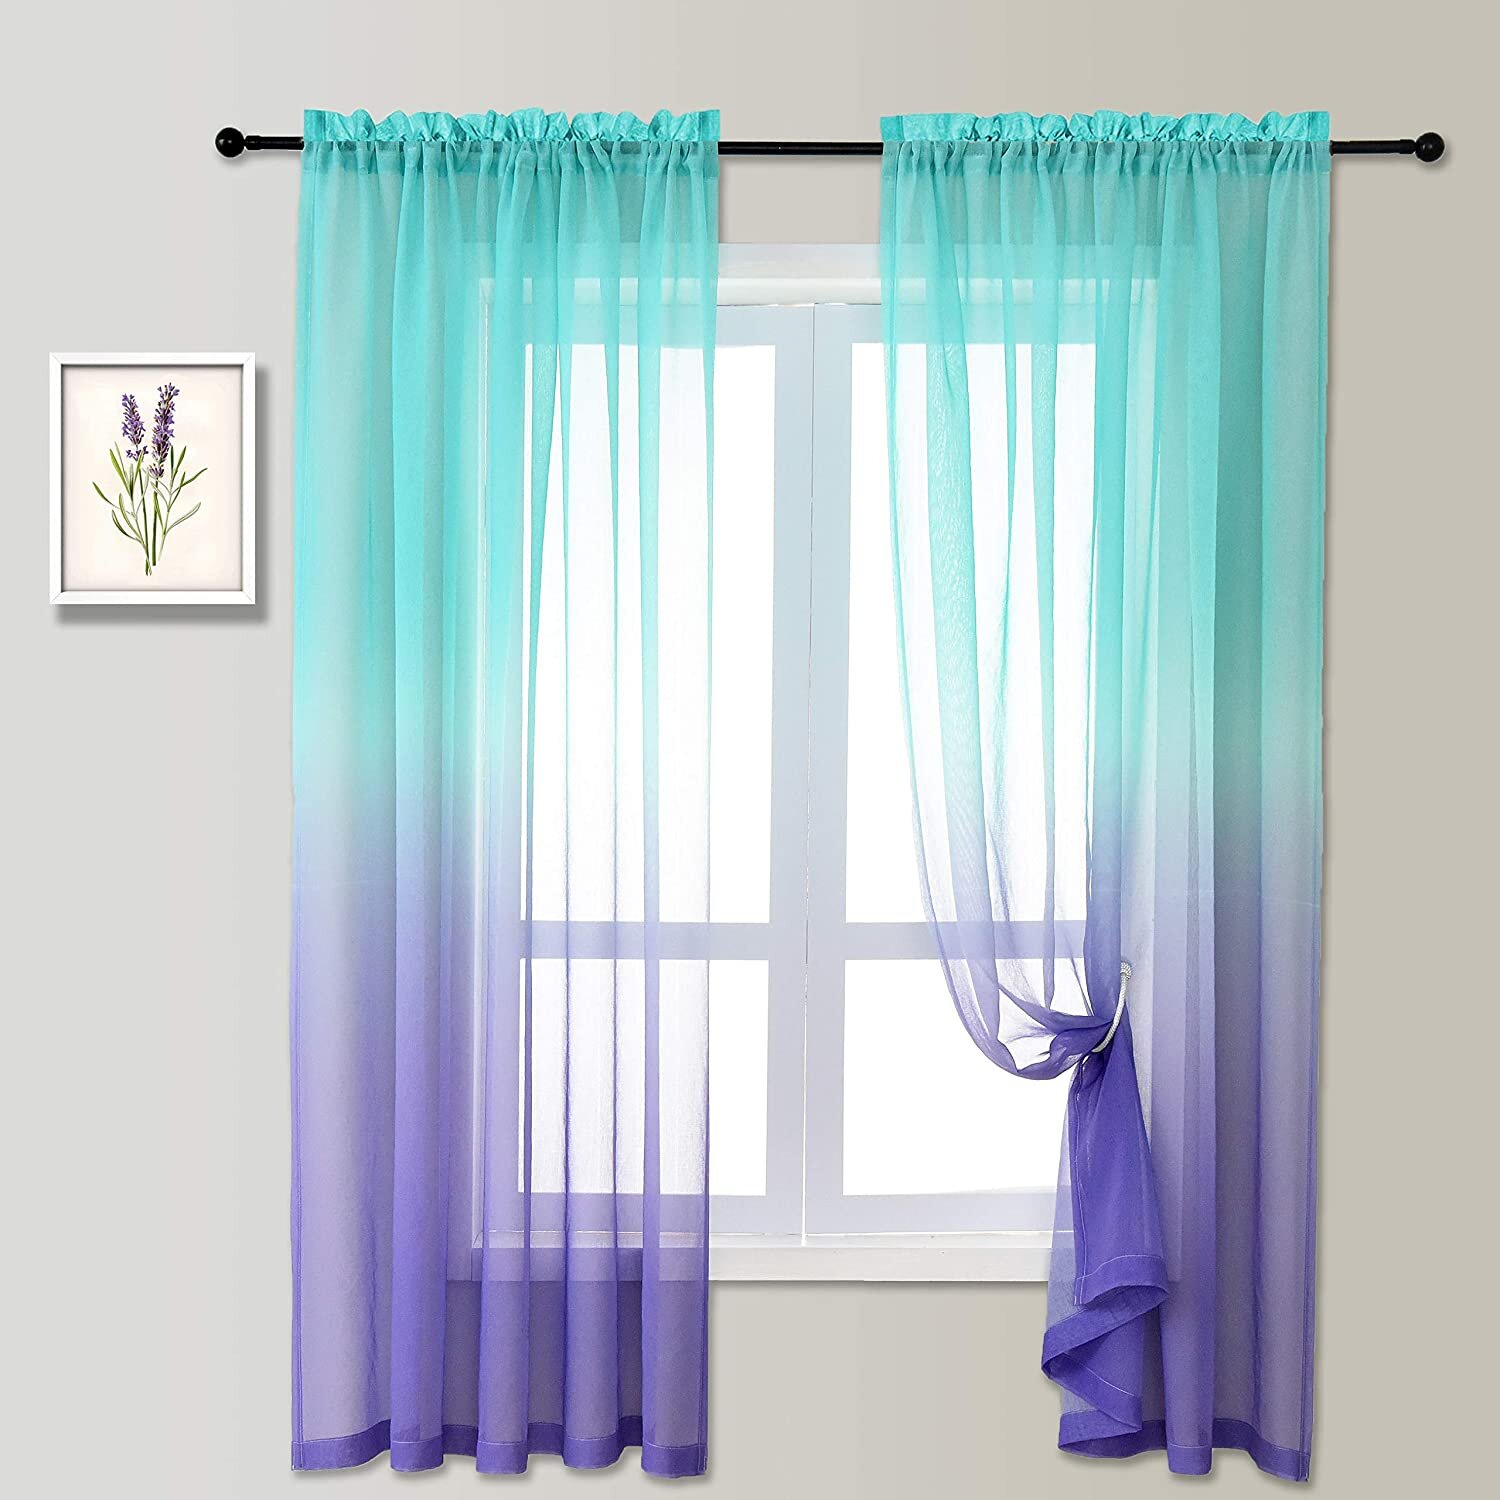 1 Chevron PINK Pattern Design Voile Sheer 2Tone Window Curtain Drape Panel 